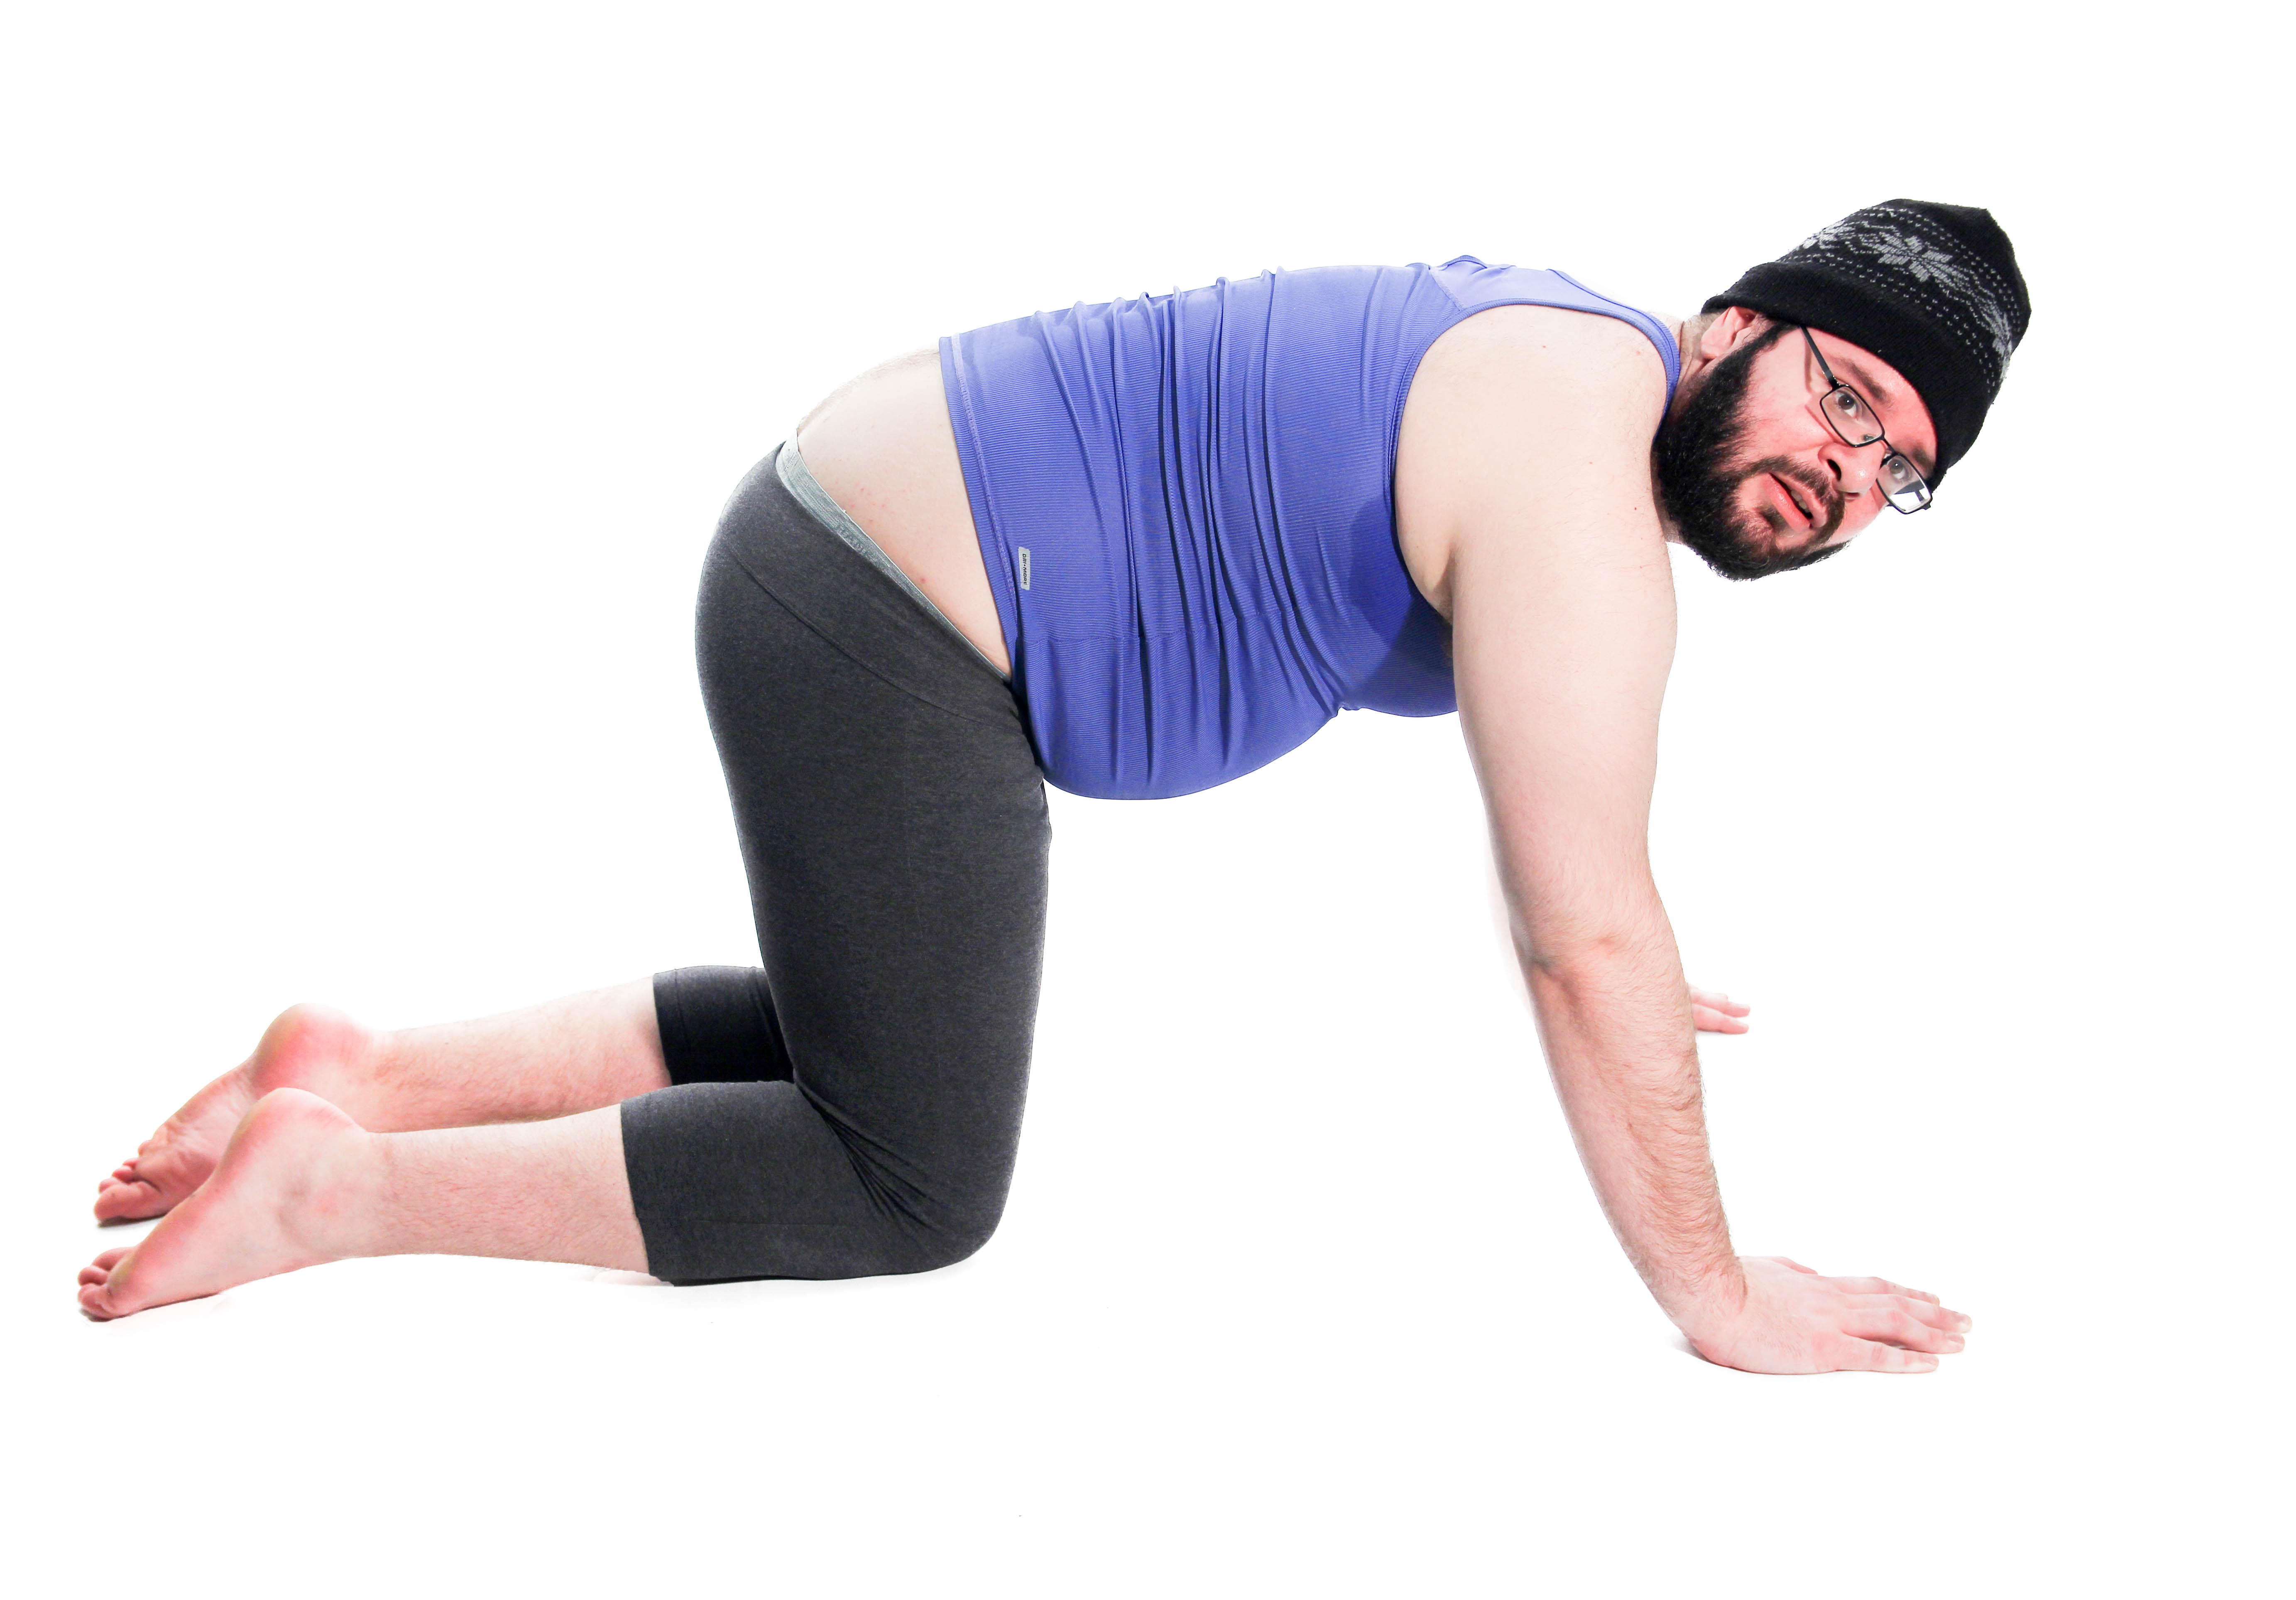 Fat yoga